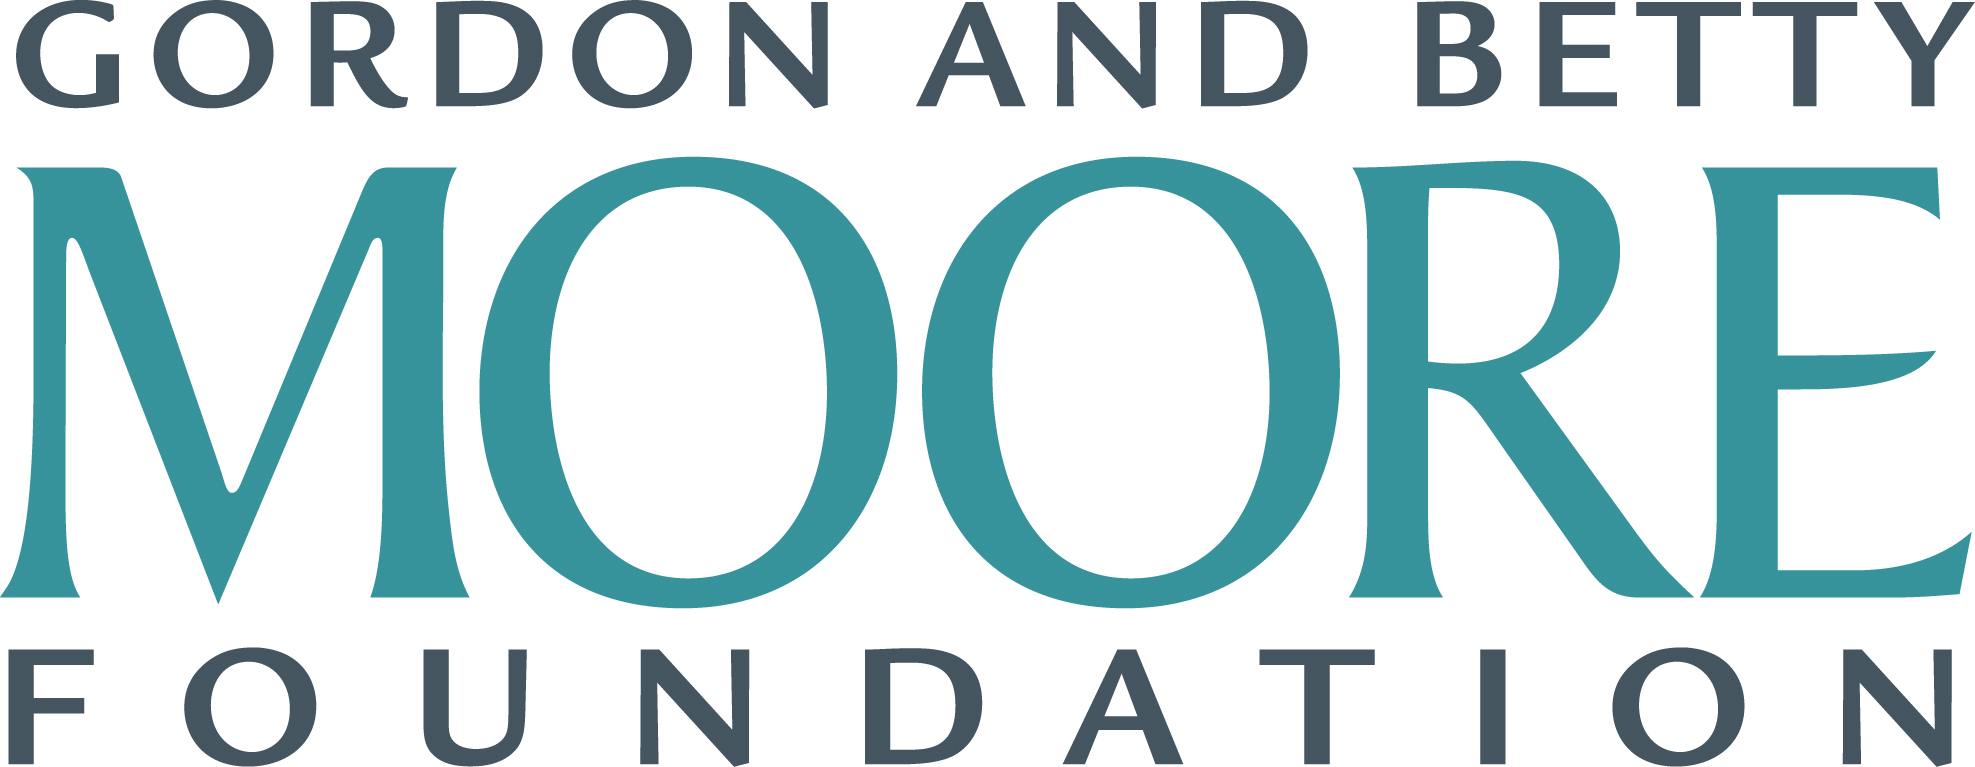 Gordon and Betty Moore Foundation logo image